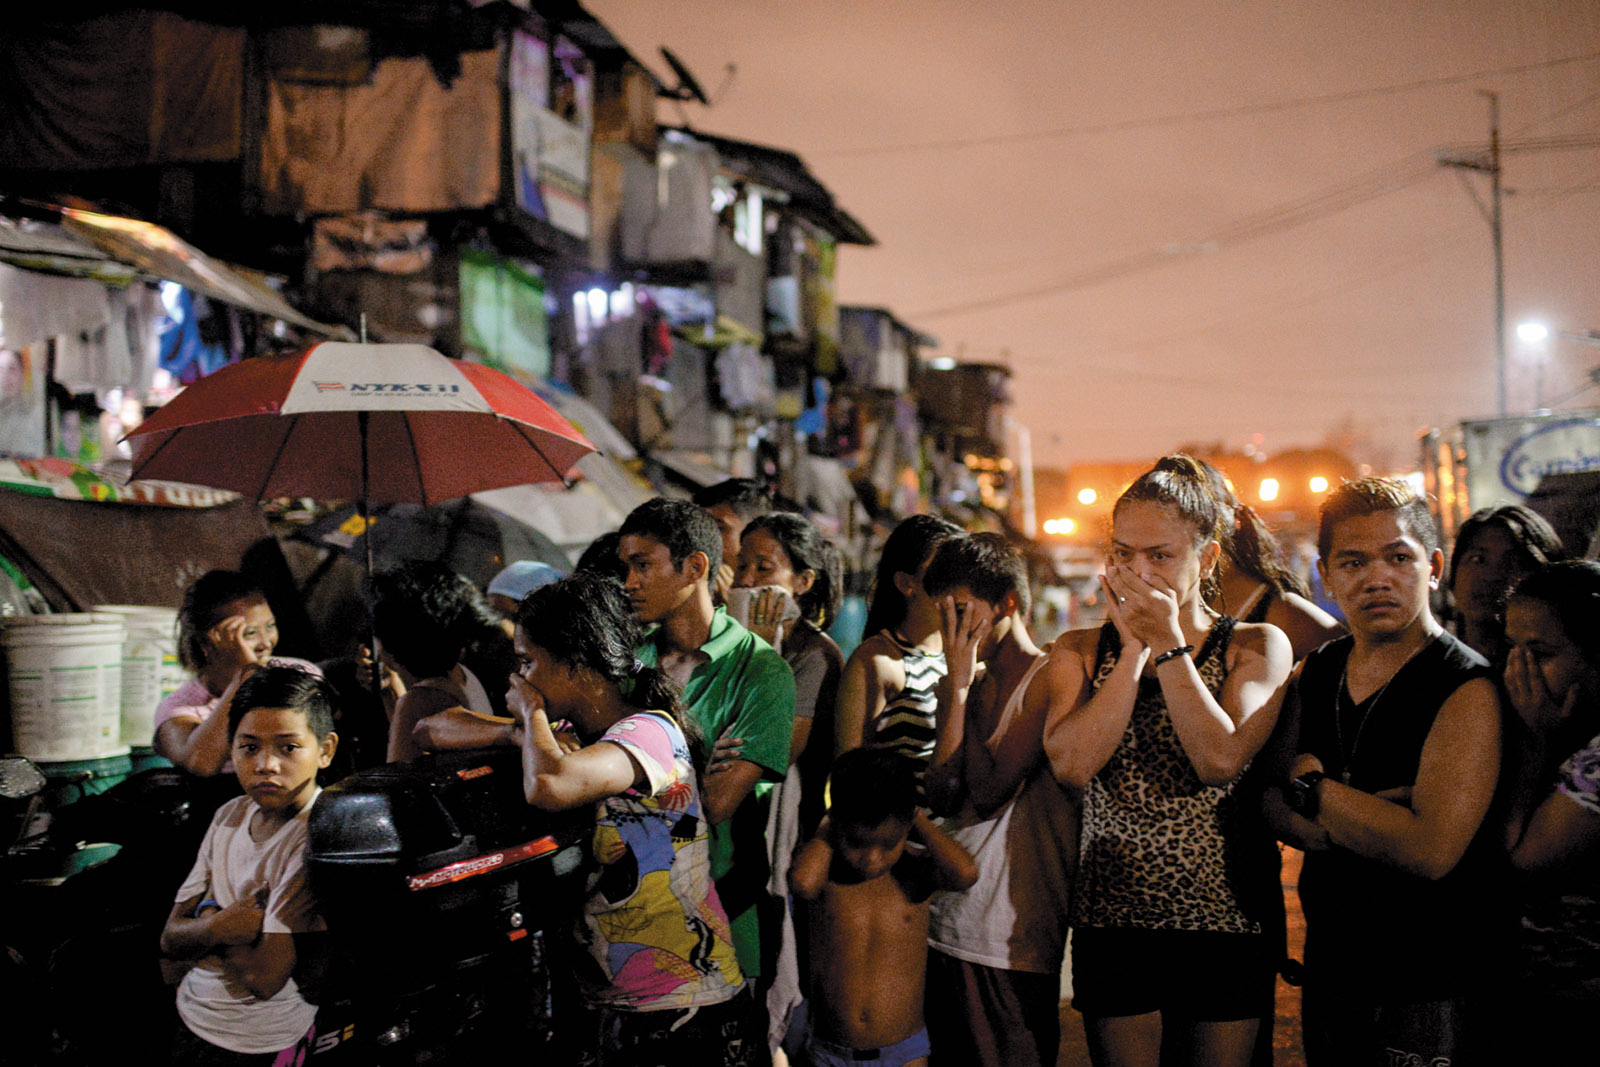 Murderous Manila: On the Night Shift